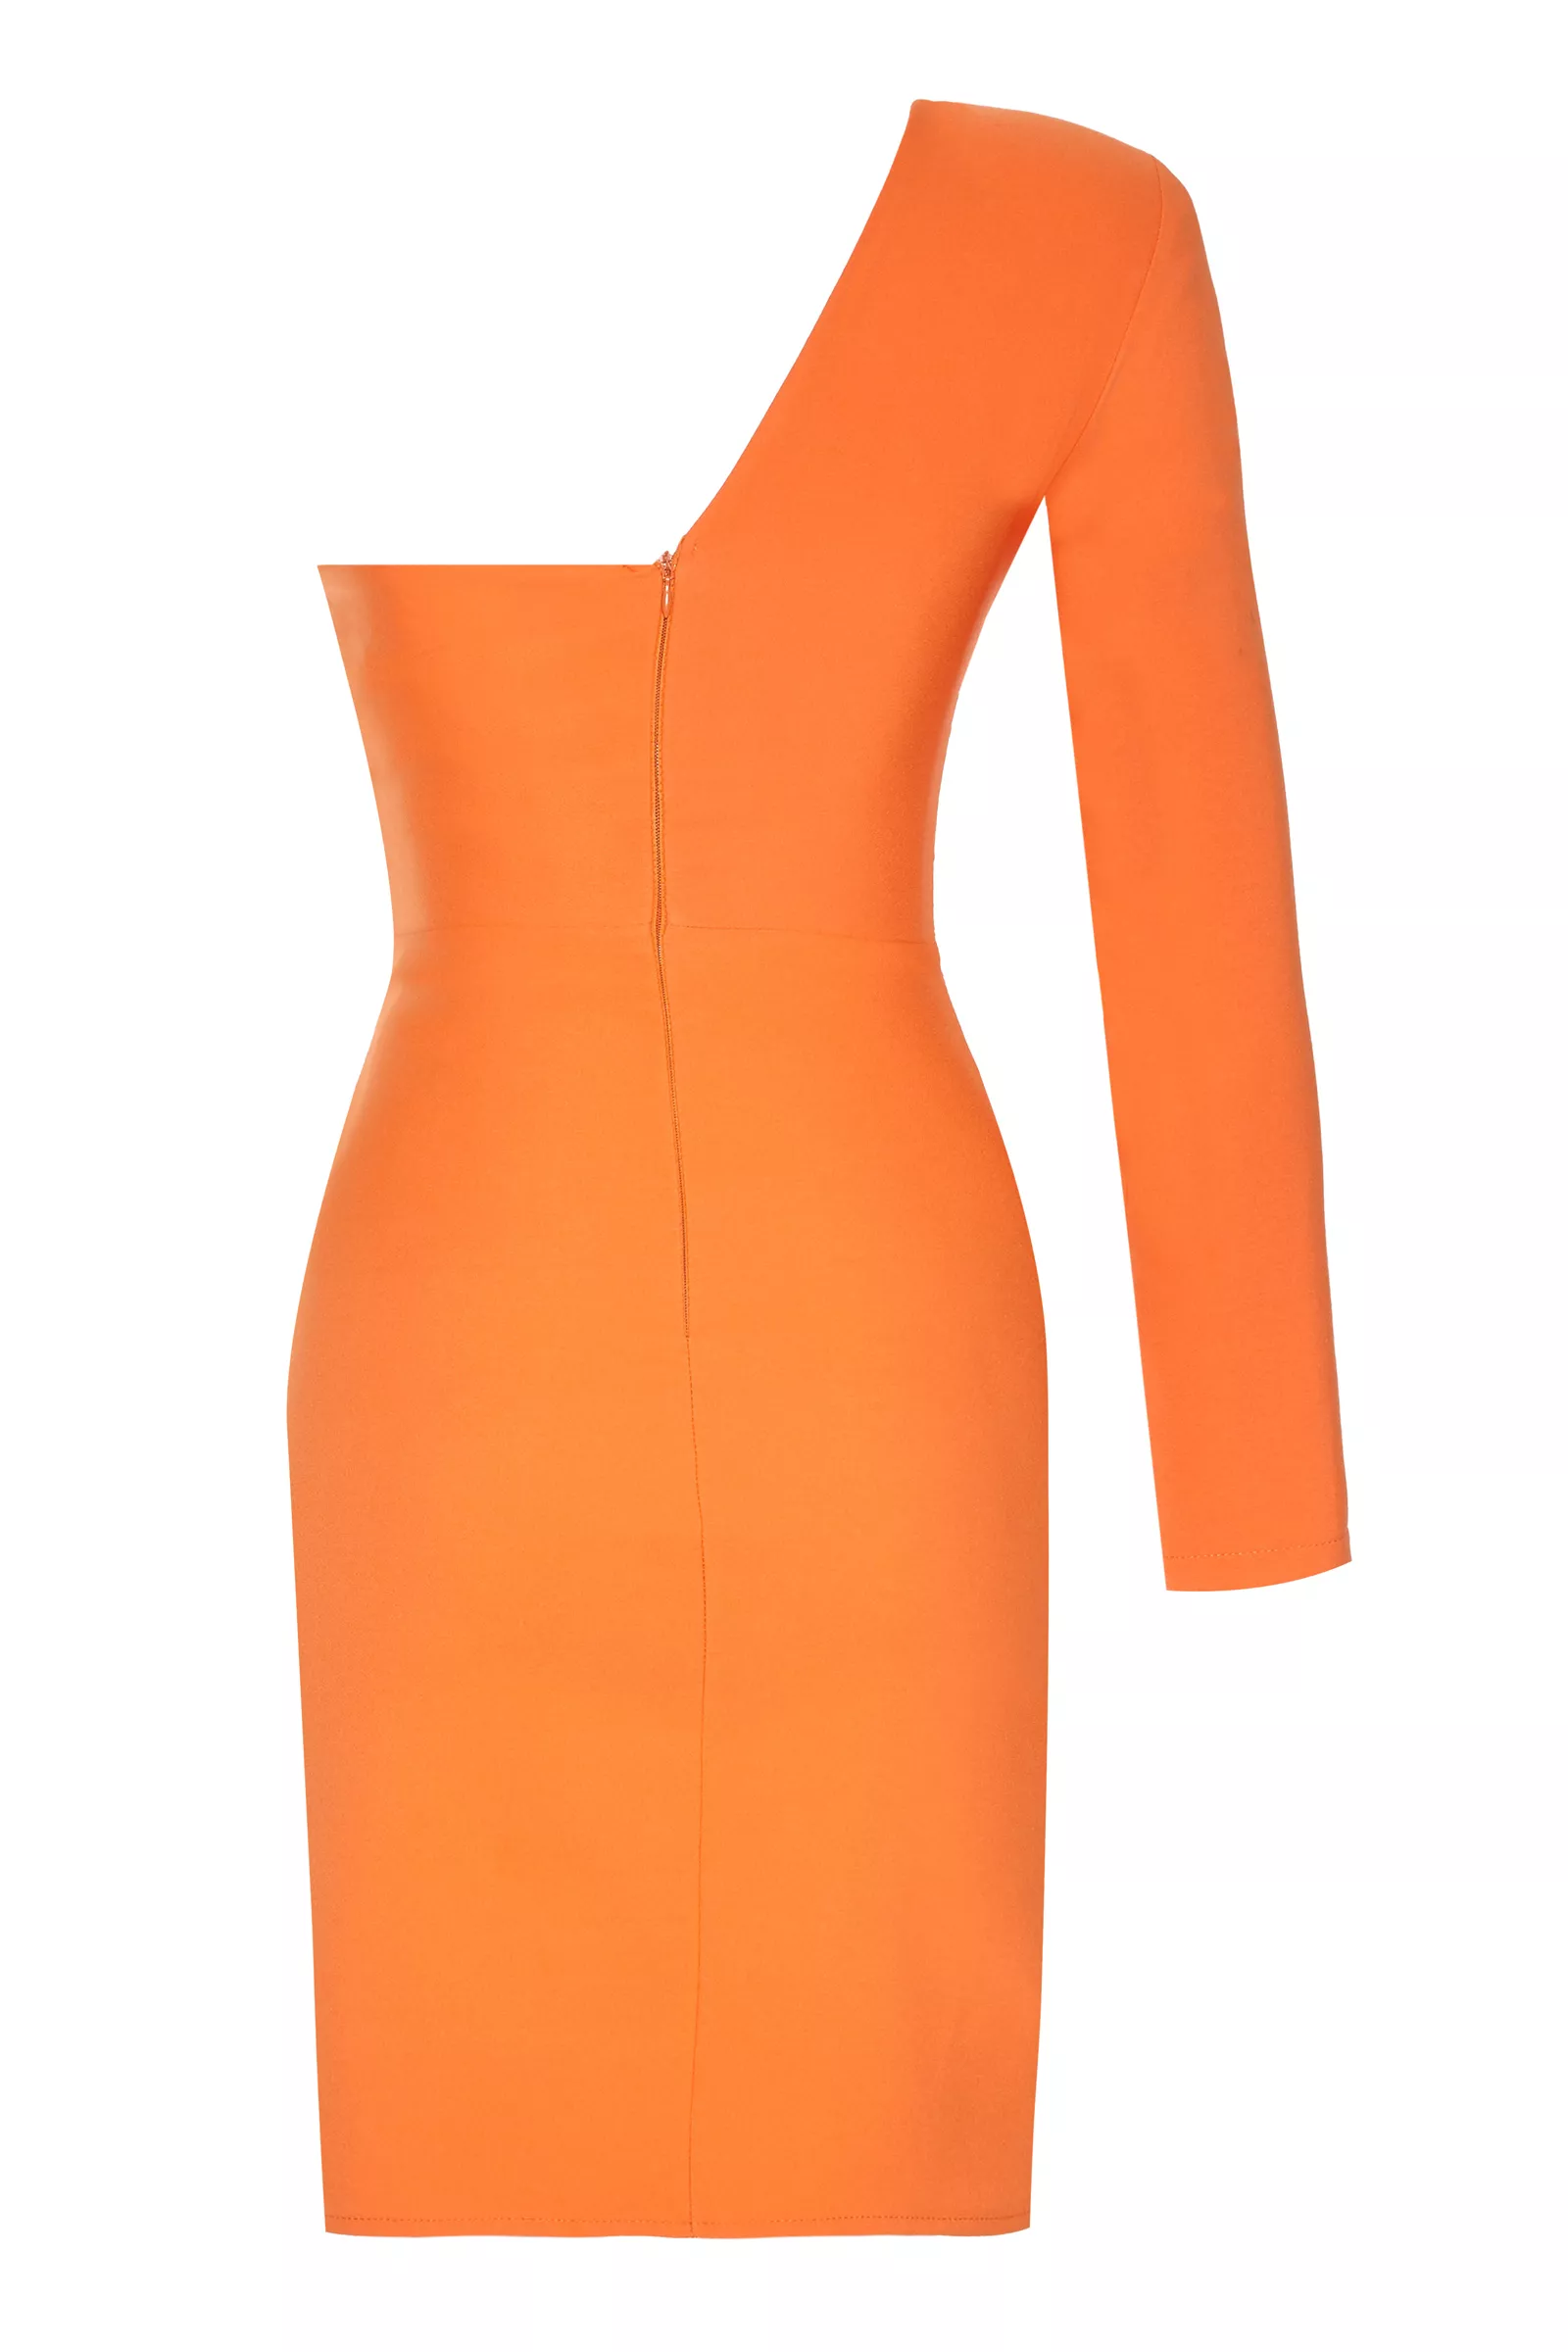 Orange crepe one arm mini dress